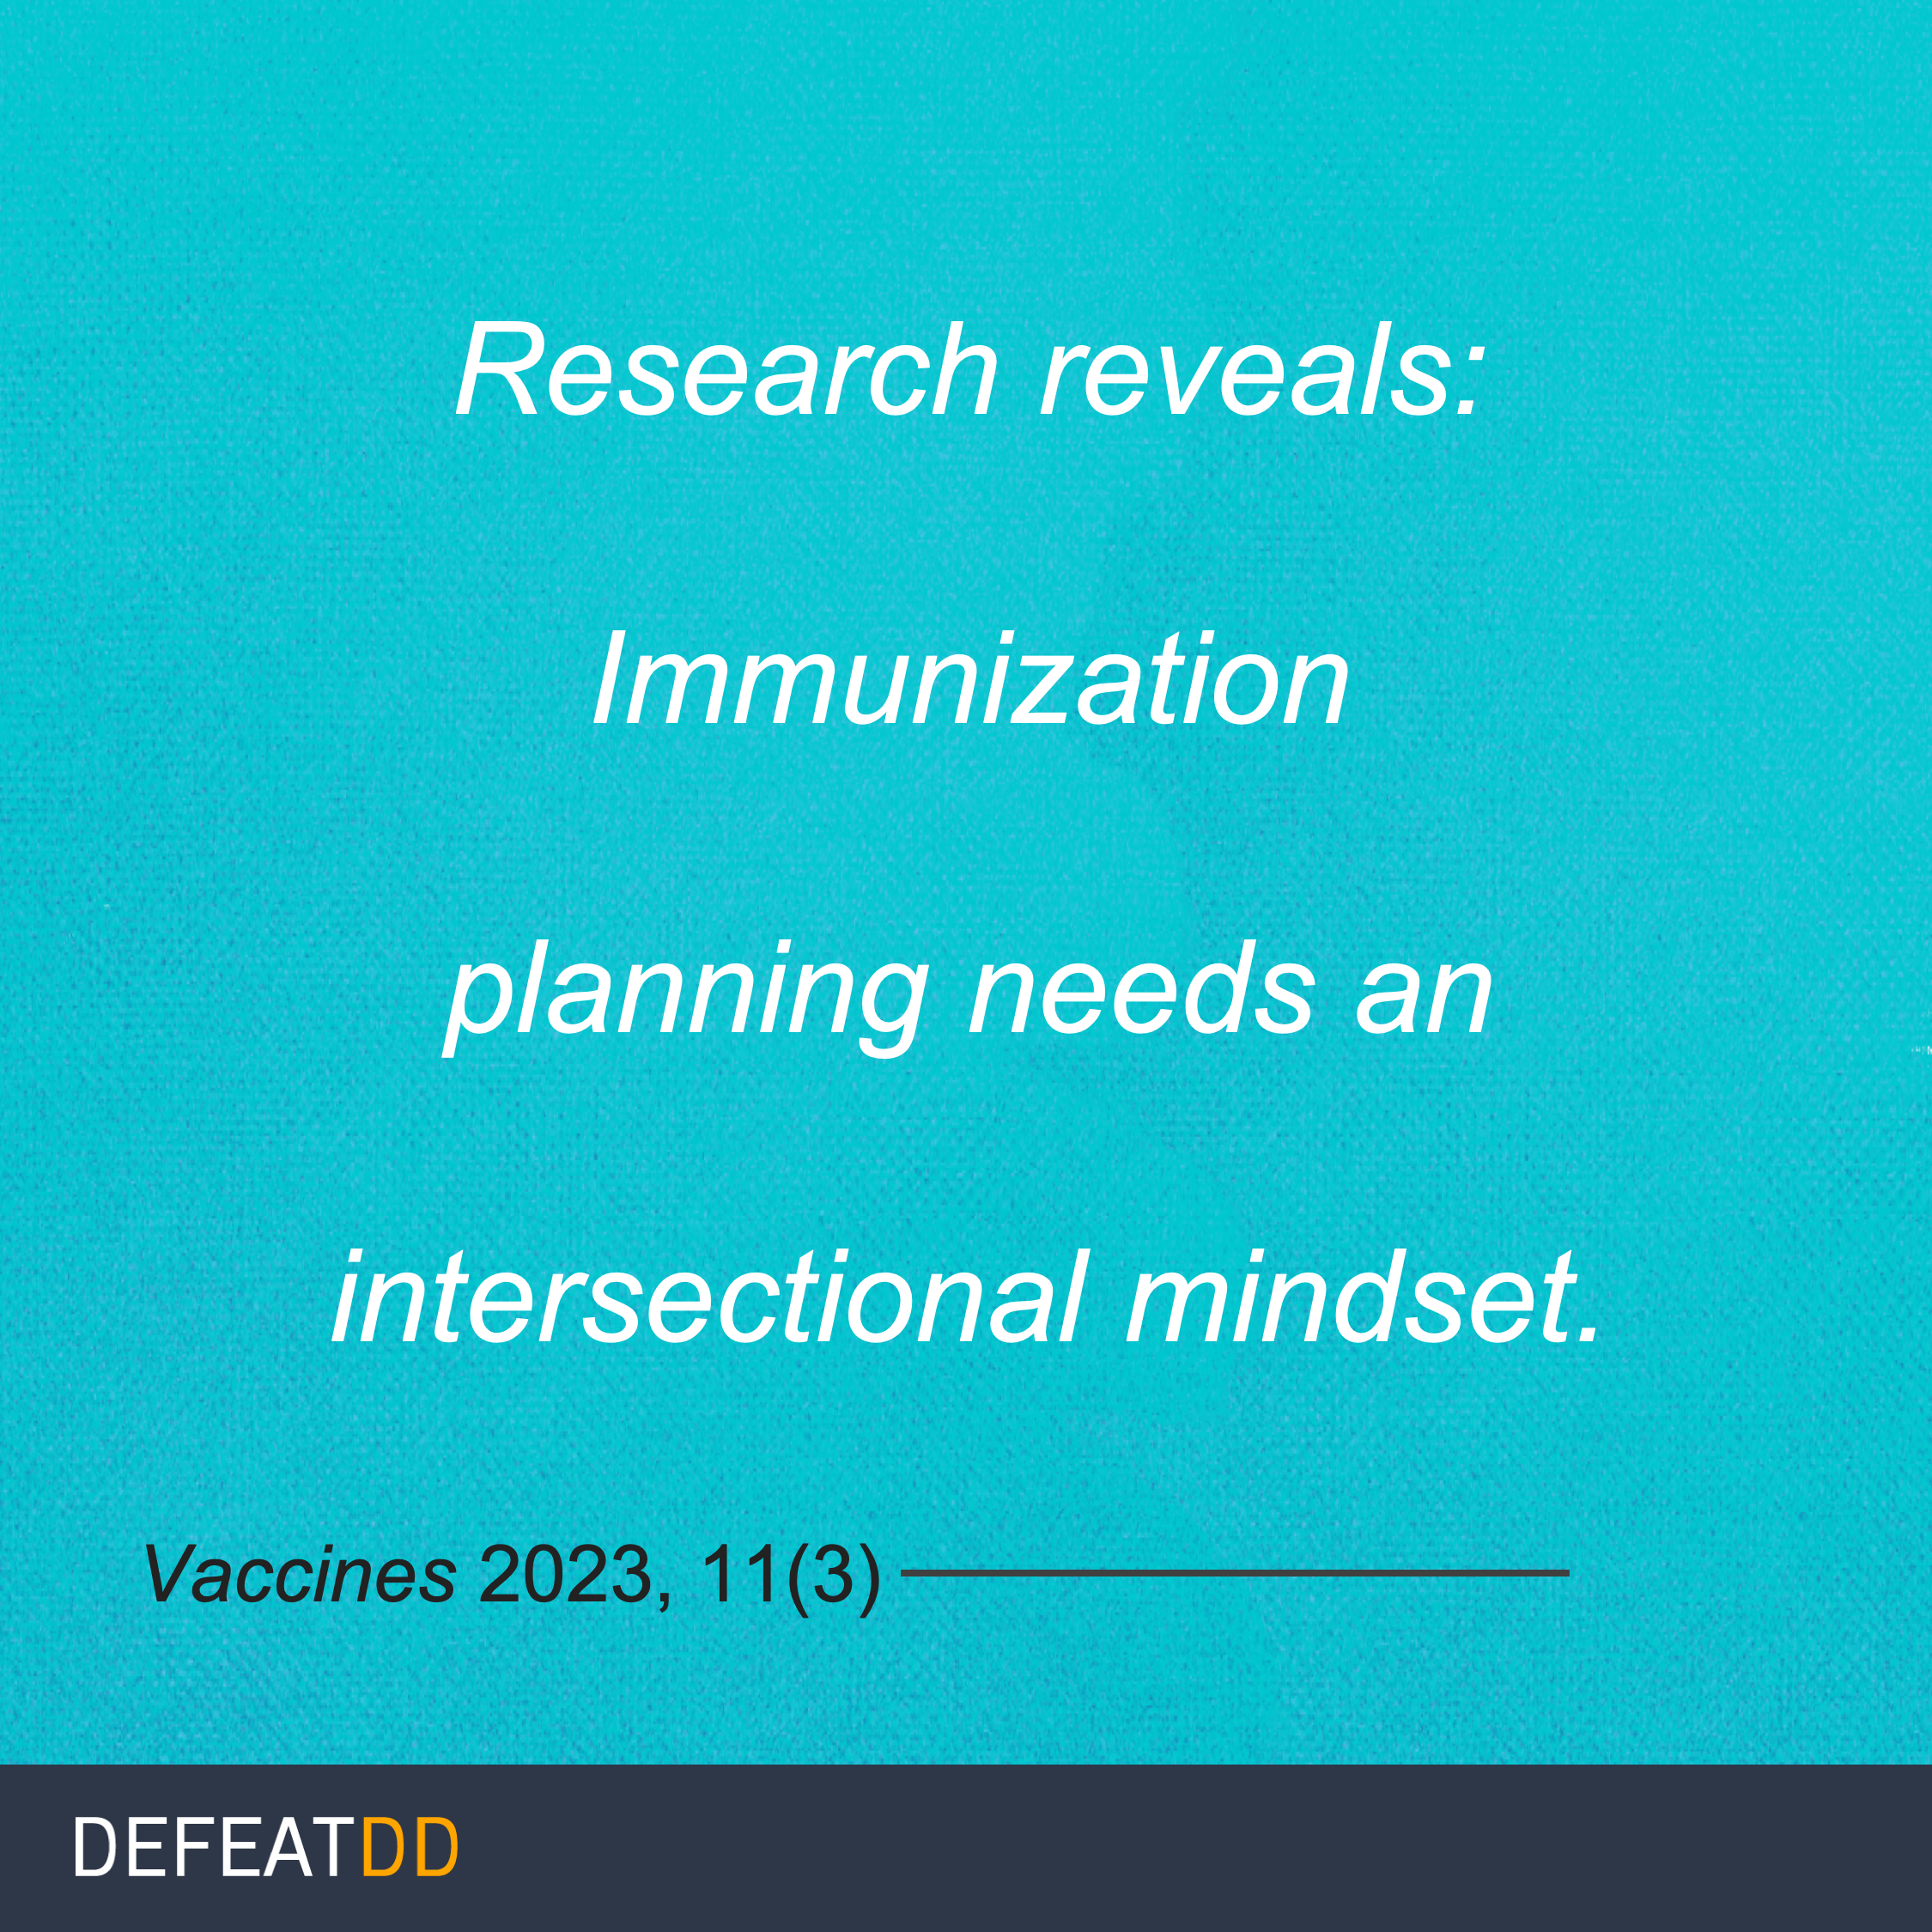 Immunization planning must be intersectional